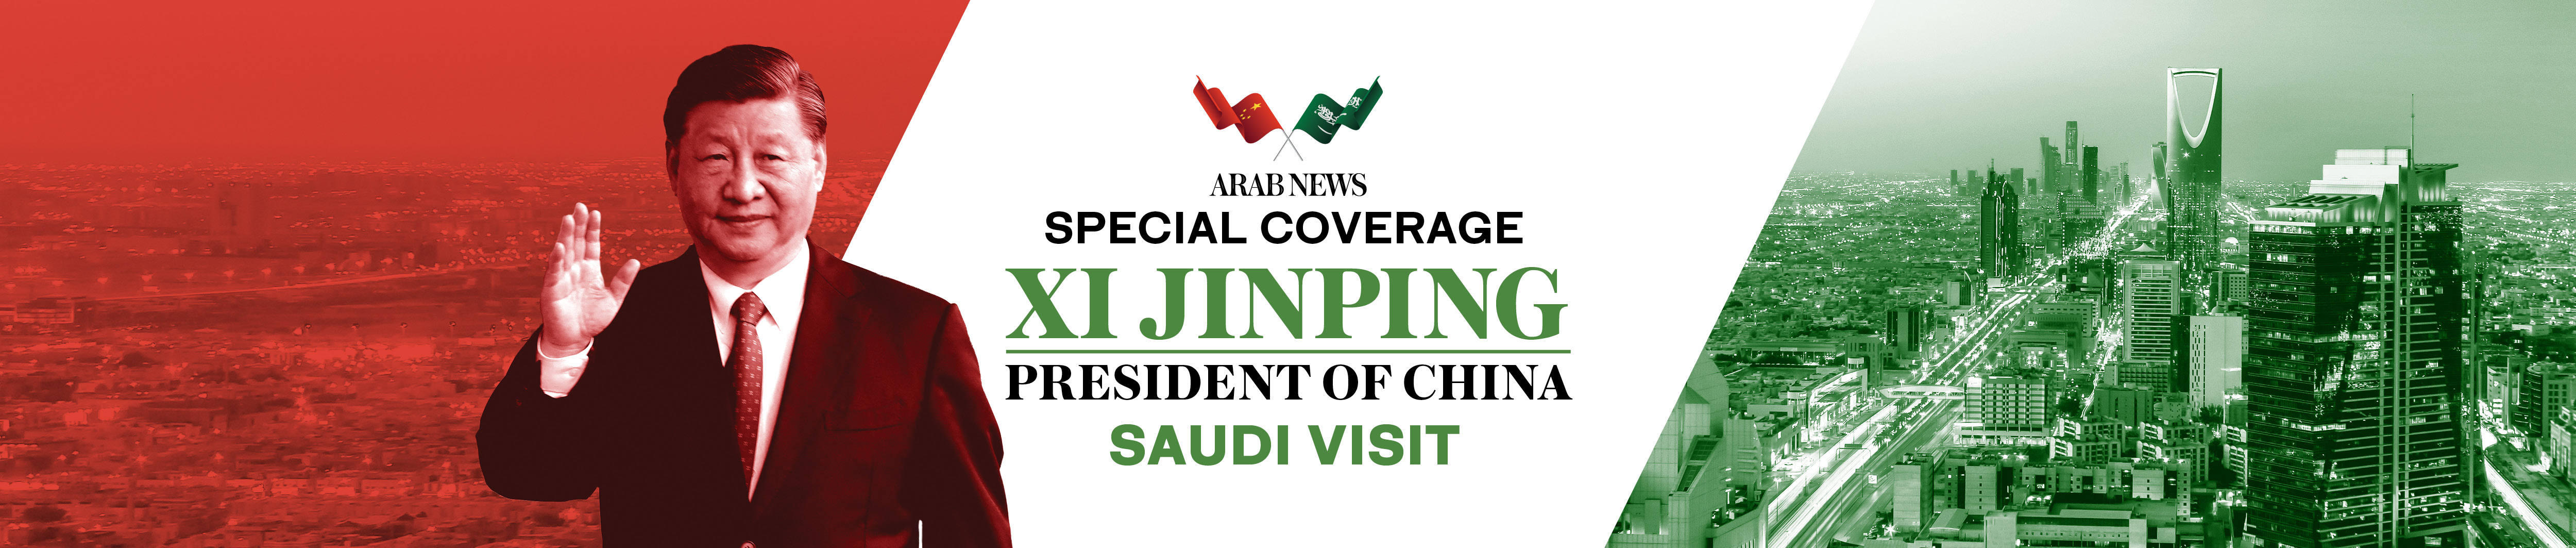 Xi Jinping visit